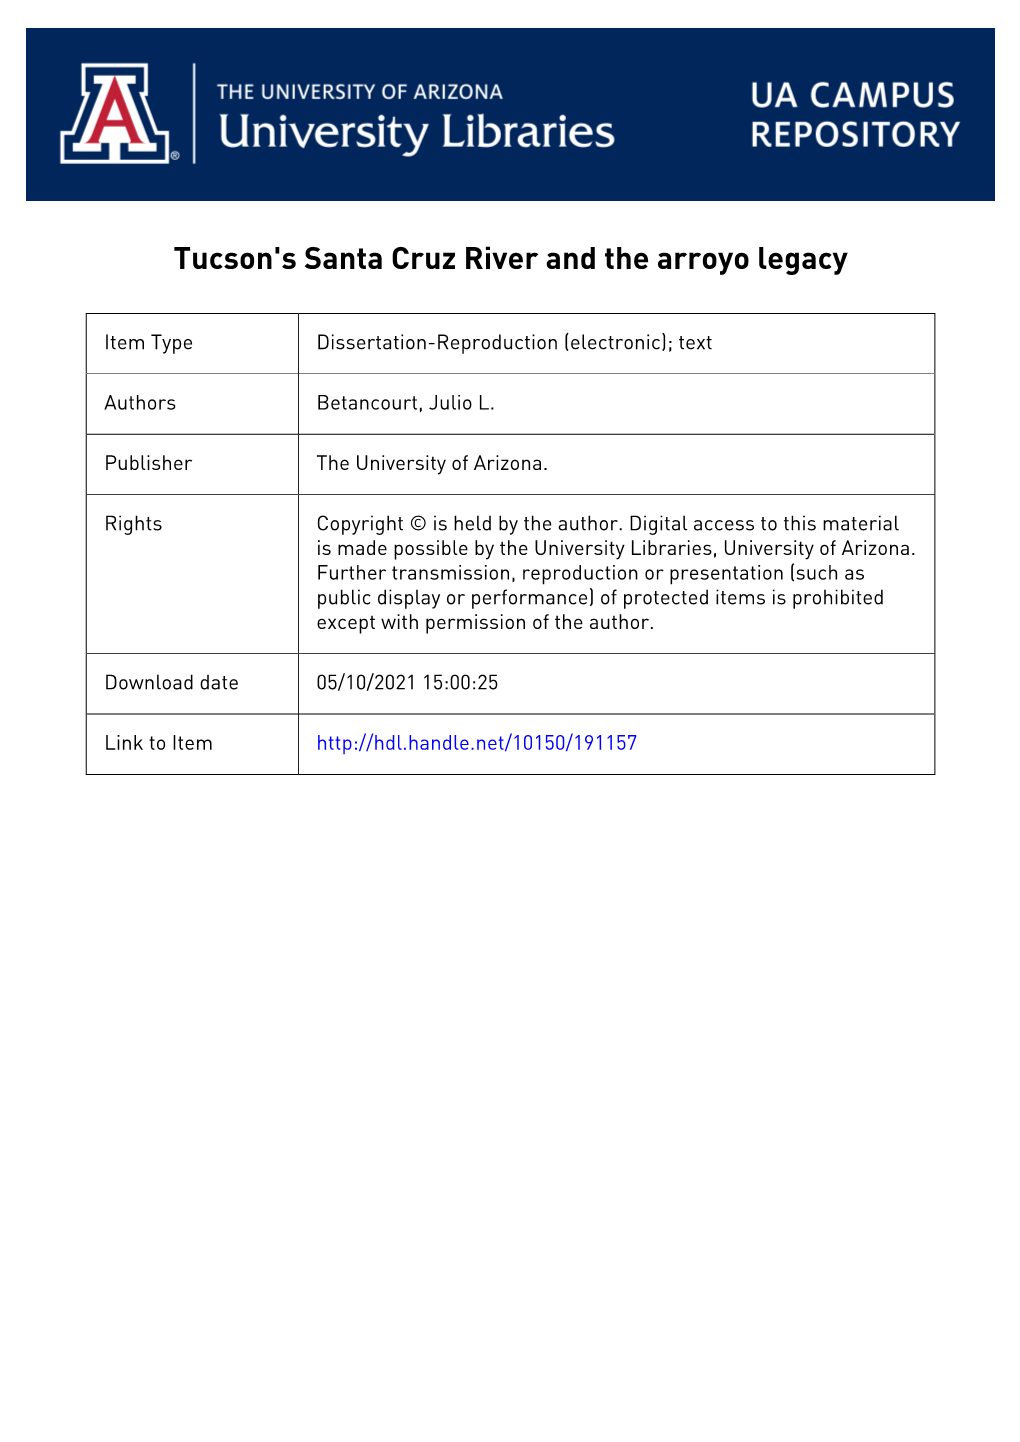 Tucson's Santa Cruz River and the Arroyo Legacy